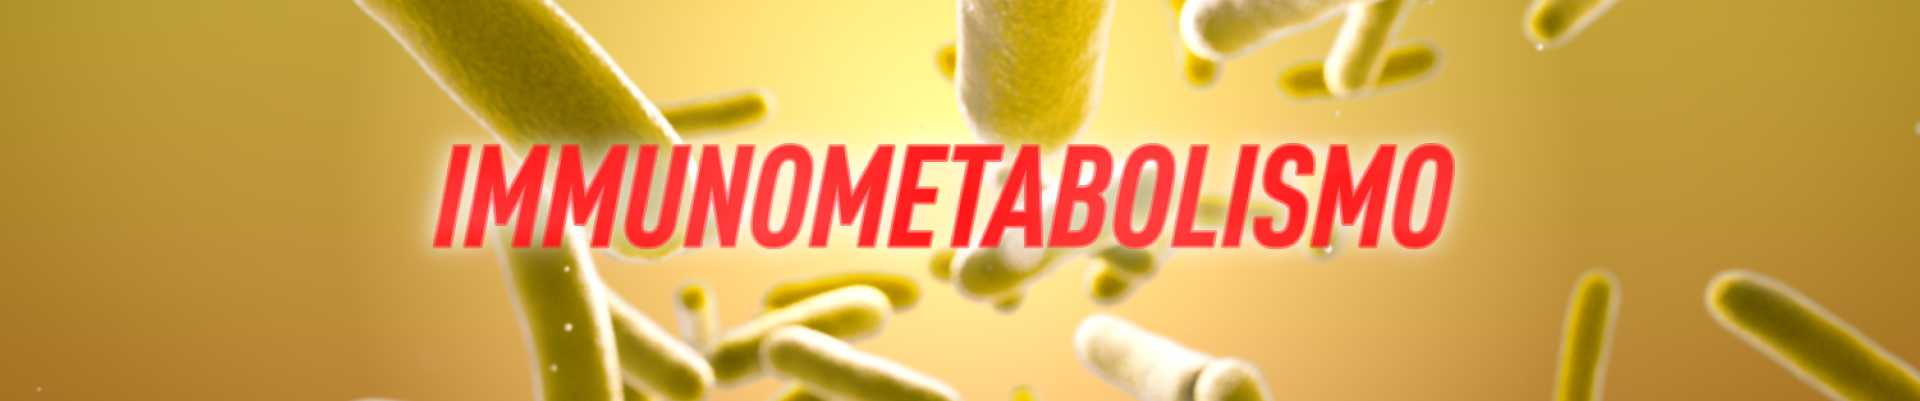 microbiota sano e immunometabolismo